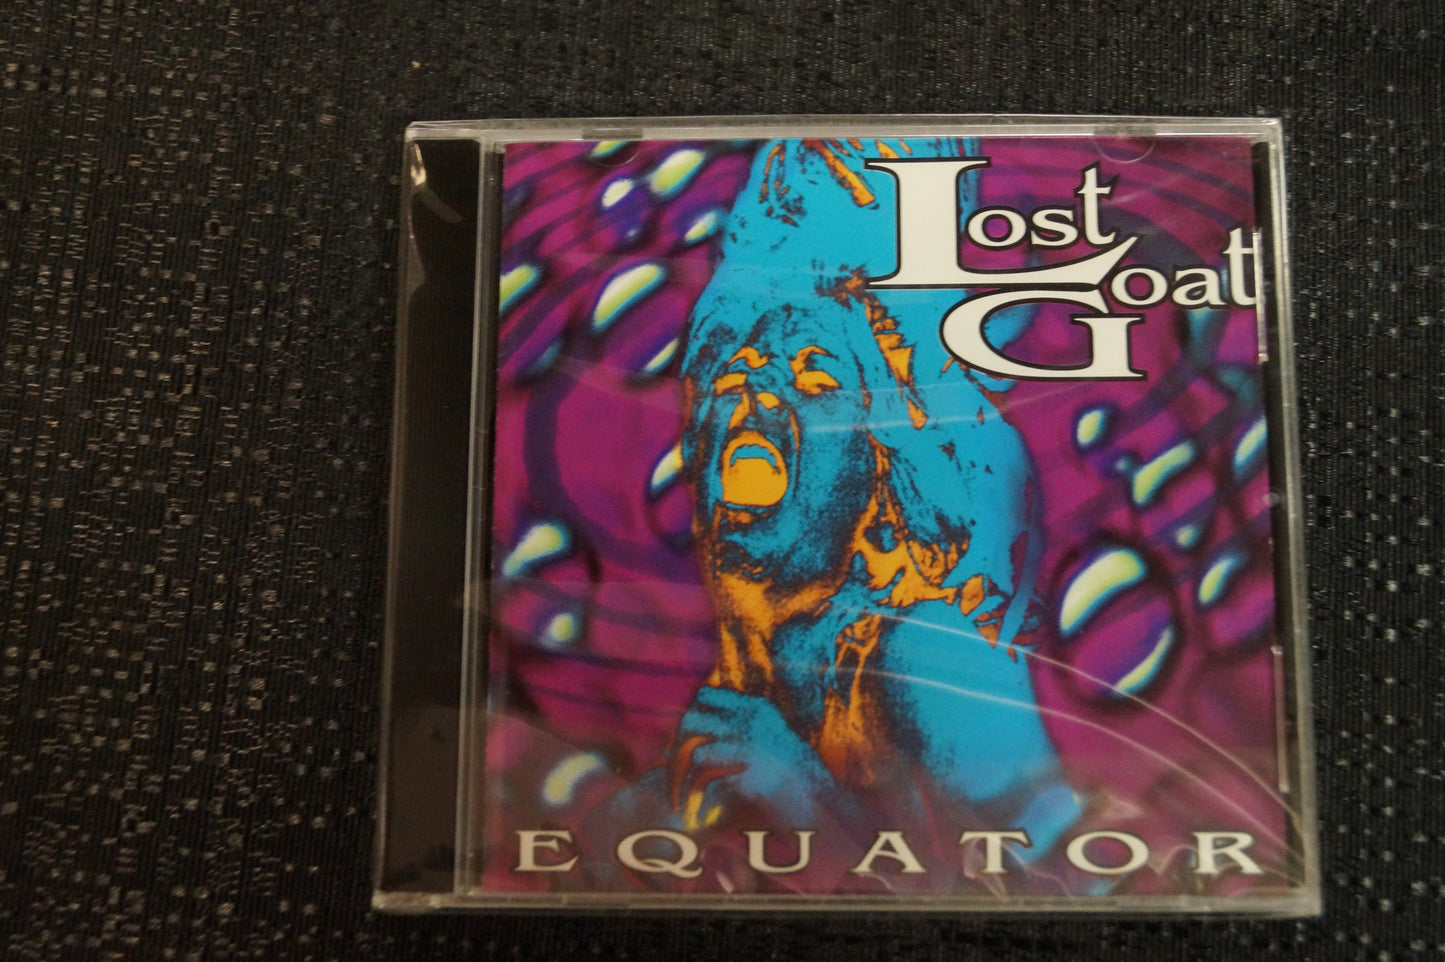 Lost Goat "Equator" 1999 CD Art By Kozik